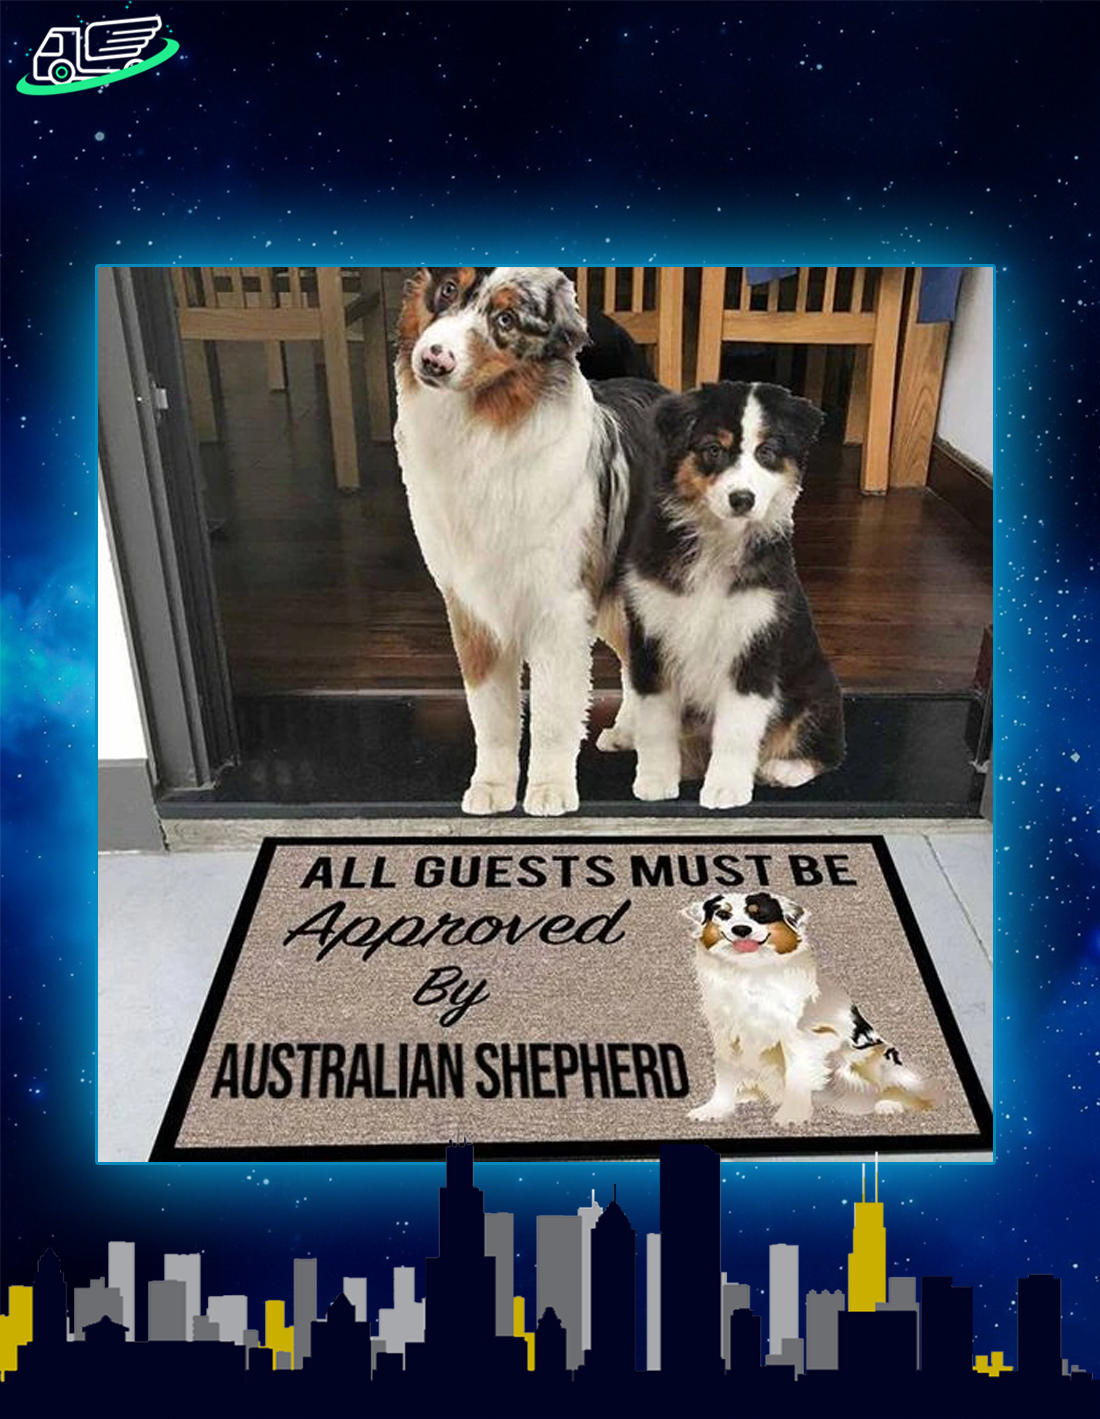 All guests must be approved by australian shepherd doormat – Saleoff 041120